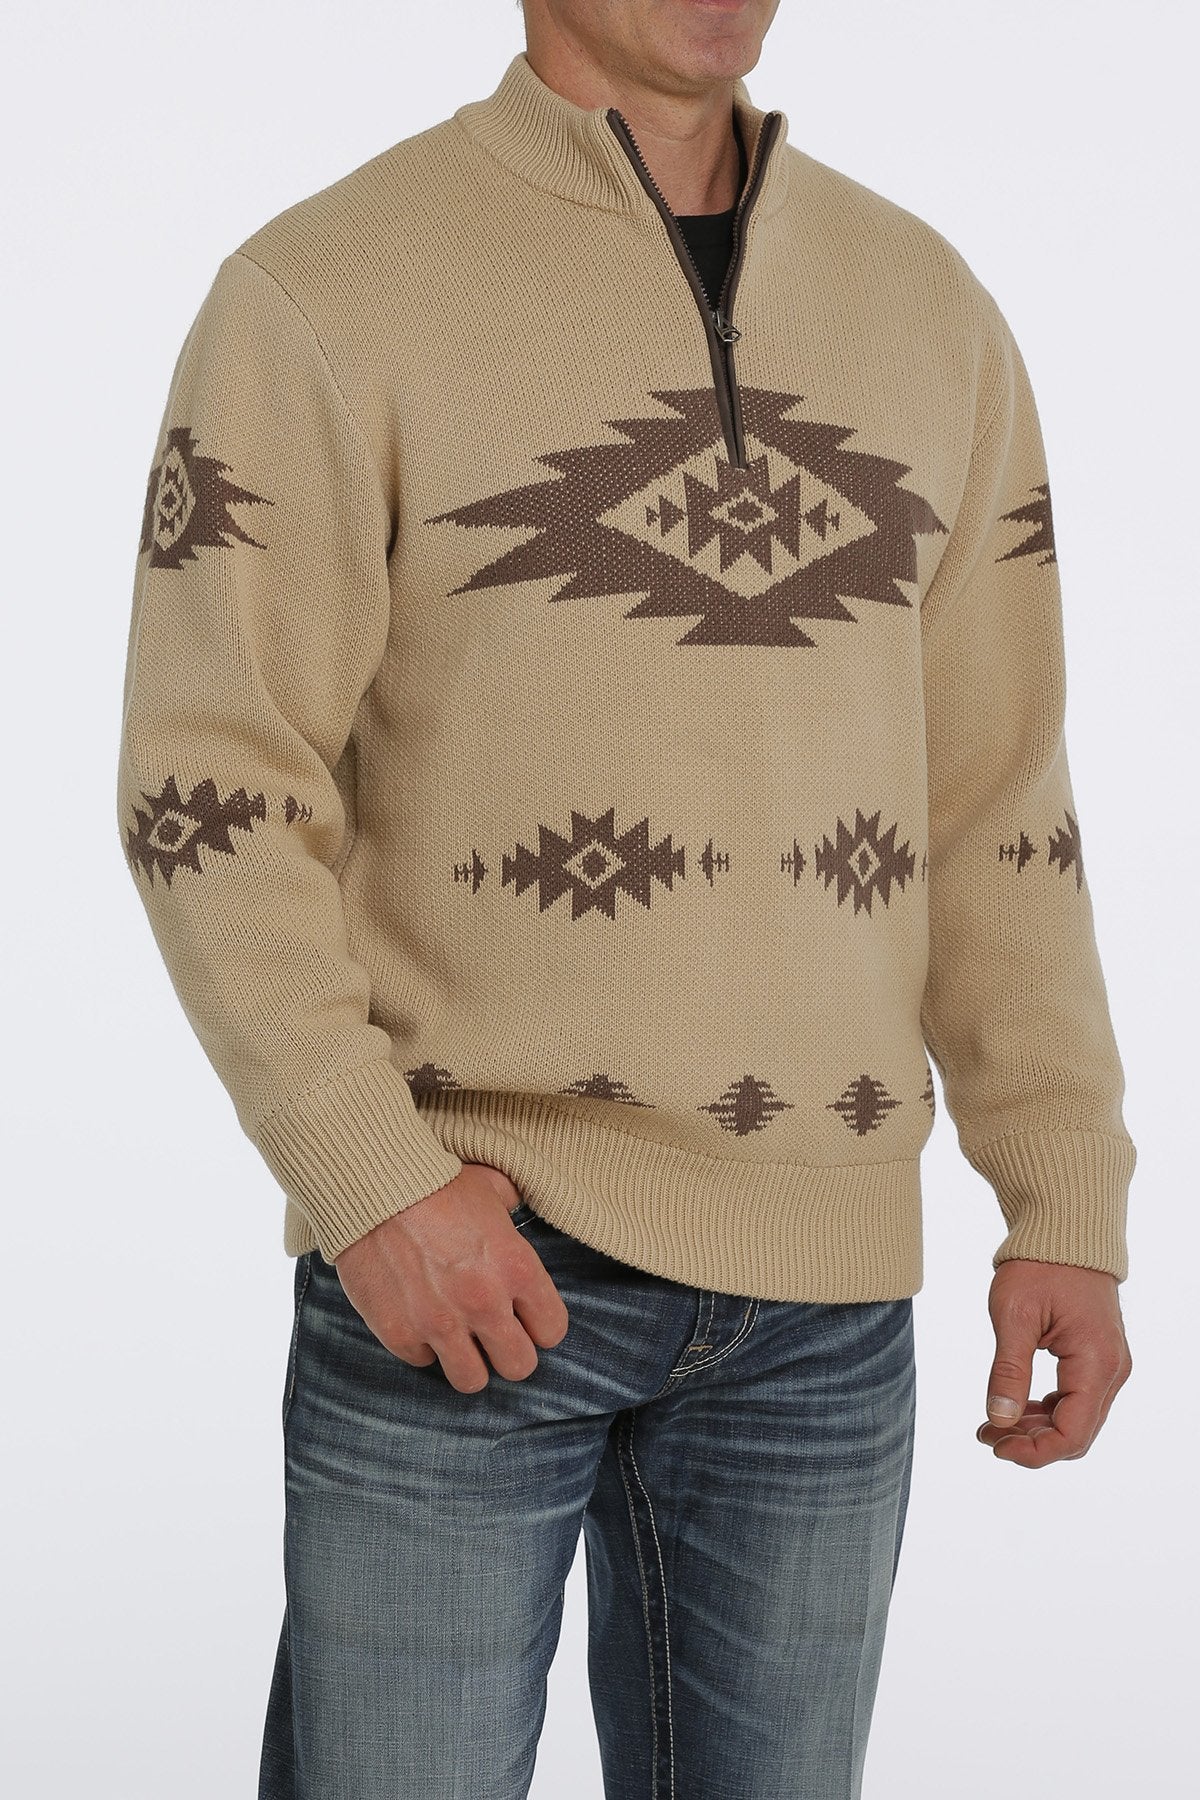 The Cinch Vintage Aztec Khaki Sweater Jacket